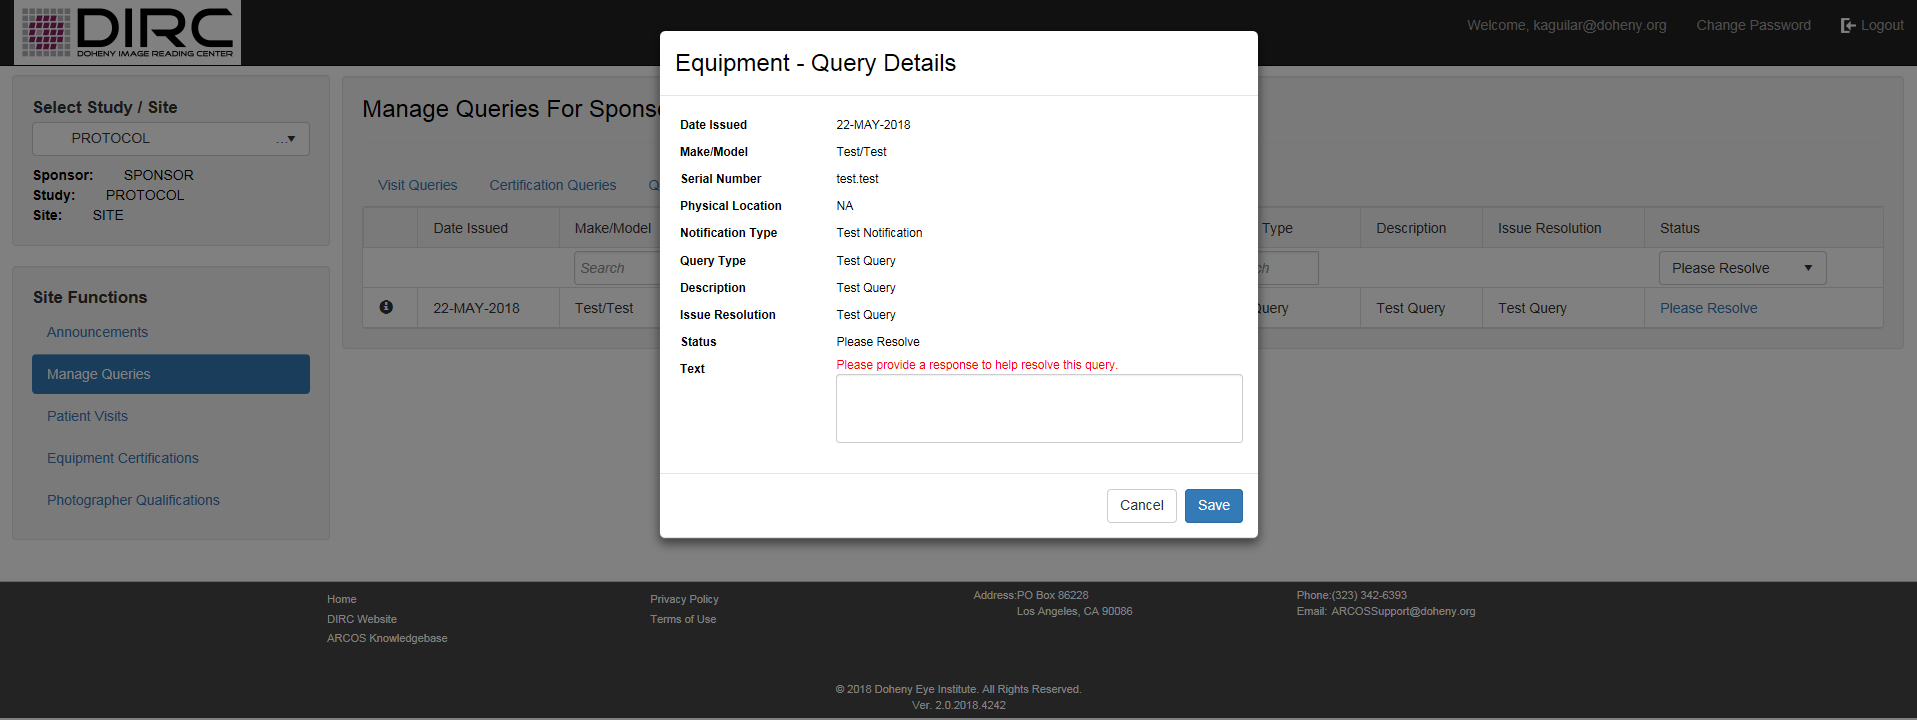 equpment-query-details-screenshot